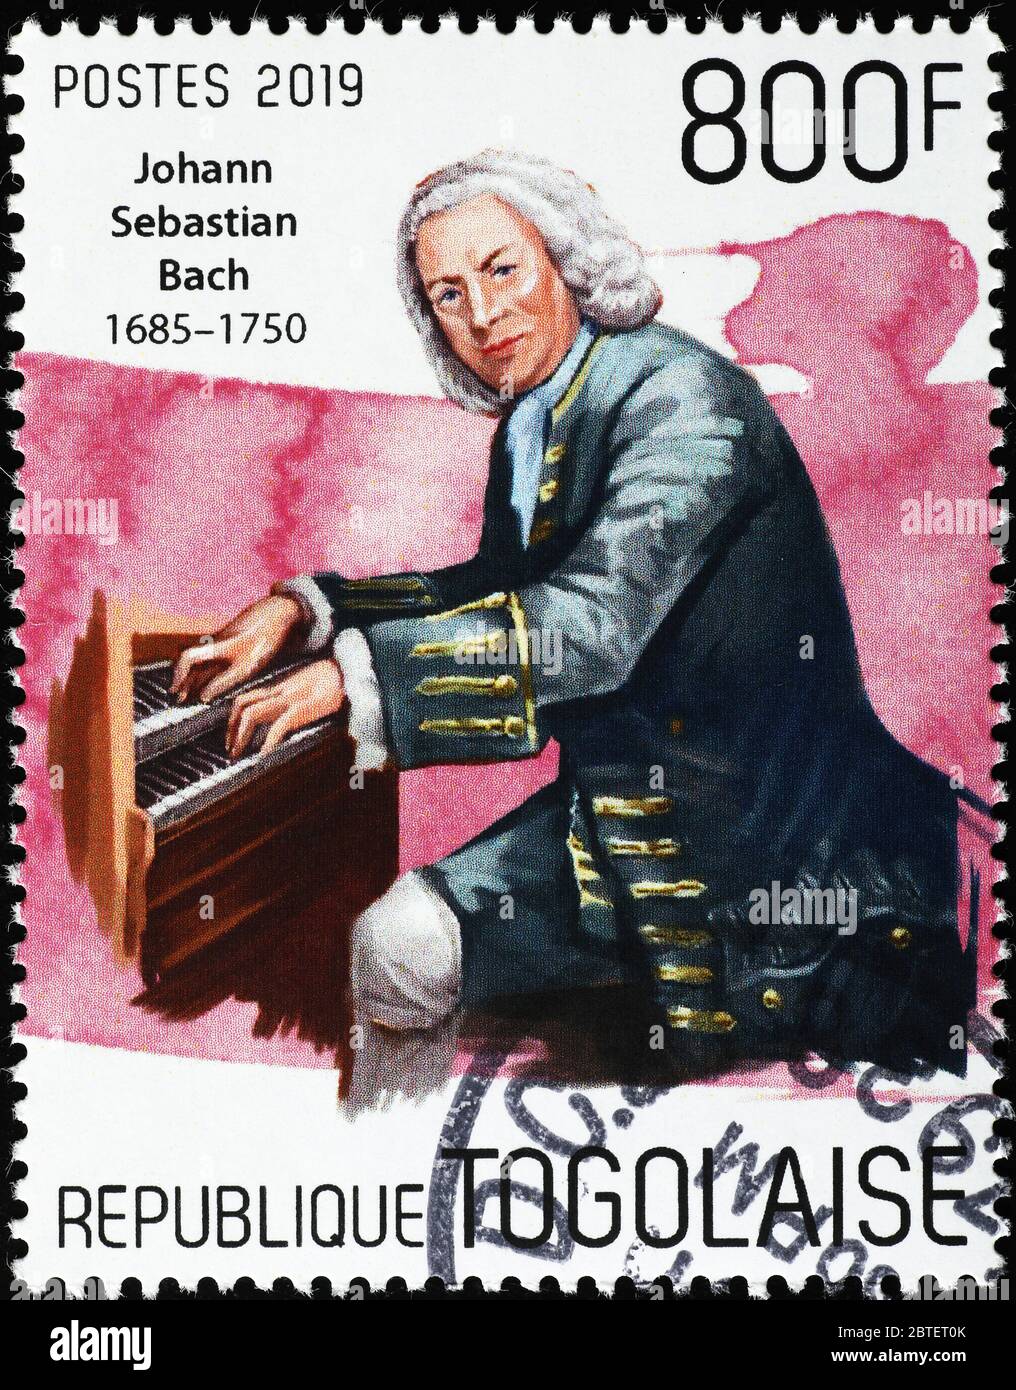 Portrait of Johann Sebastian Bach on postage stamp Stock Photo